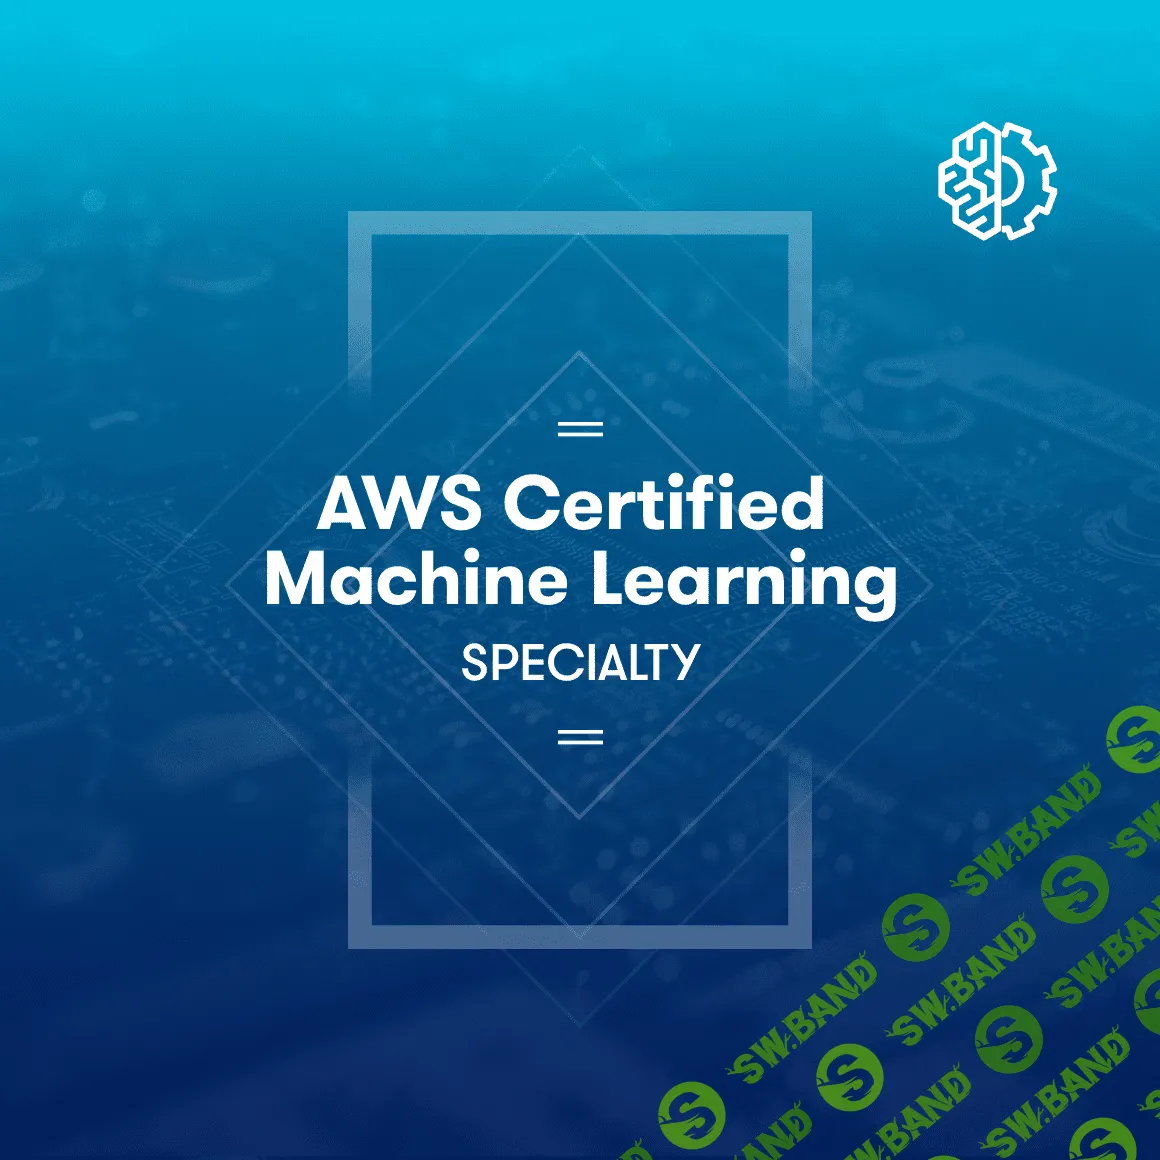 [acloud.guru] AWS Certified Machine Learning - Specialty 2019